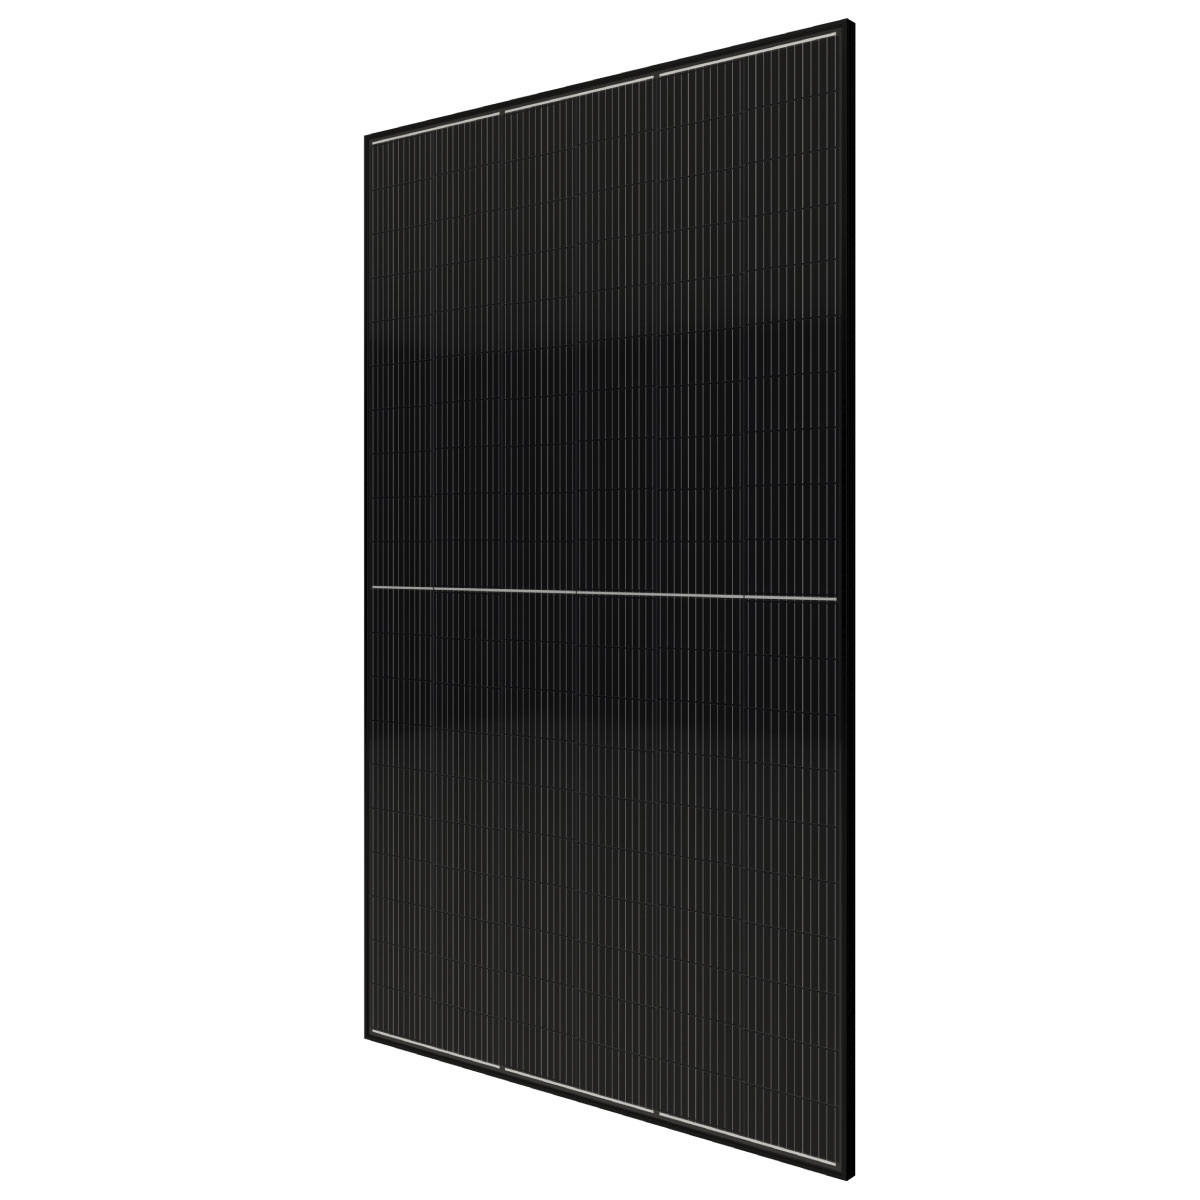 TommaTech 595Wp 120PM M12 Full Black Solar Panel